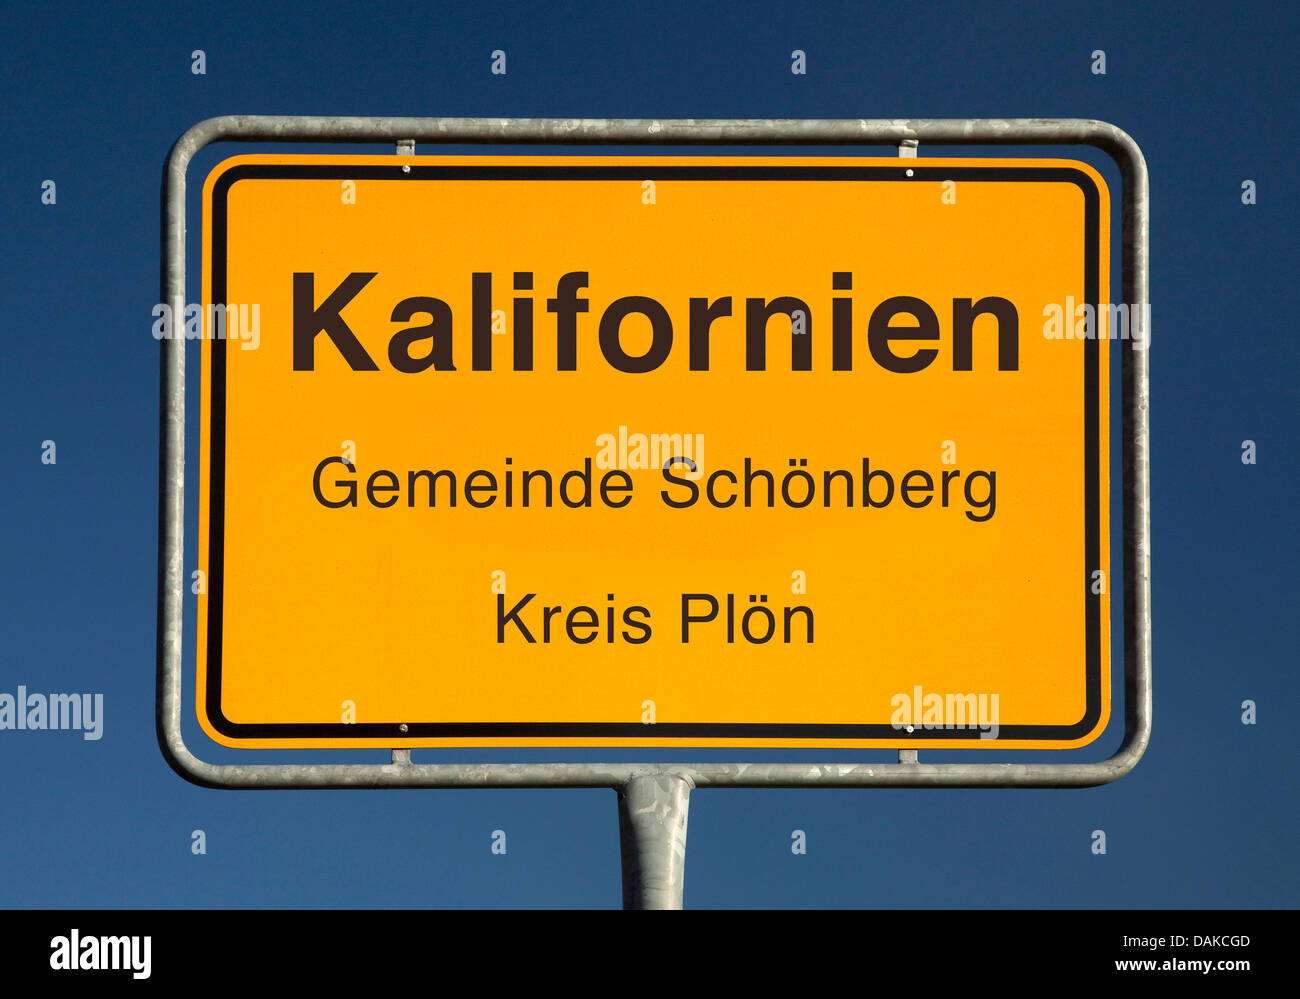 Kalifornien place name sign, Germany, Schleswig-Holstein, Kreis Ploen, Kalifornien Stock Photo